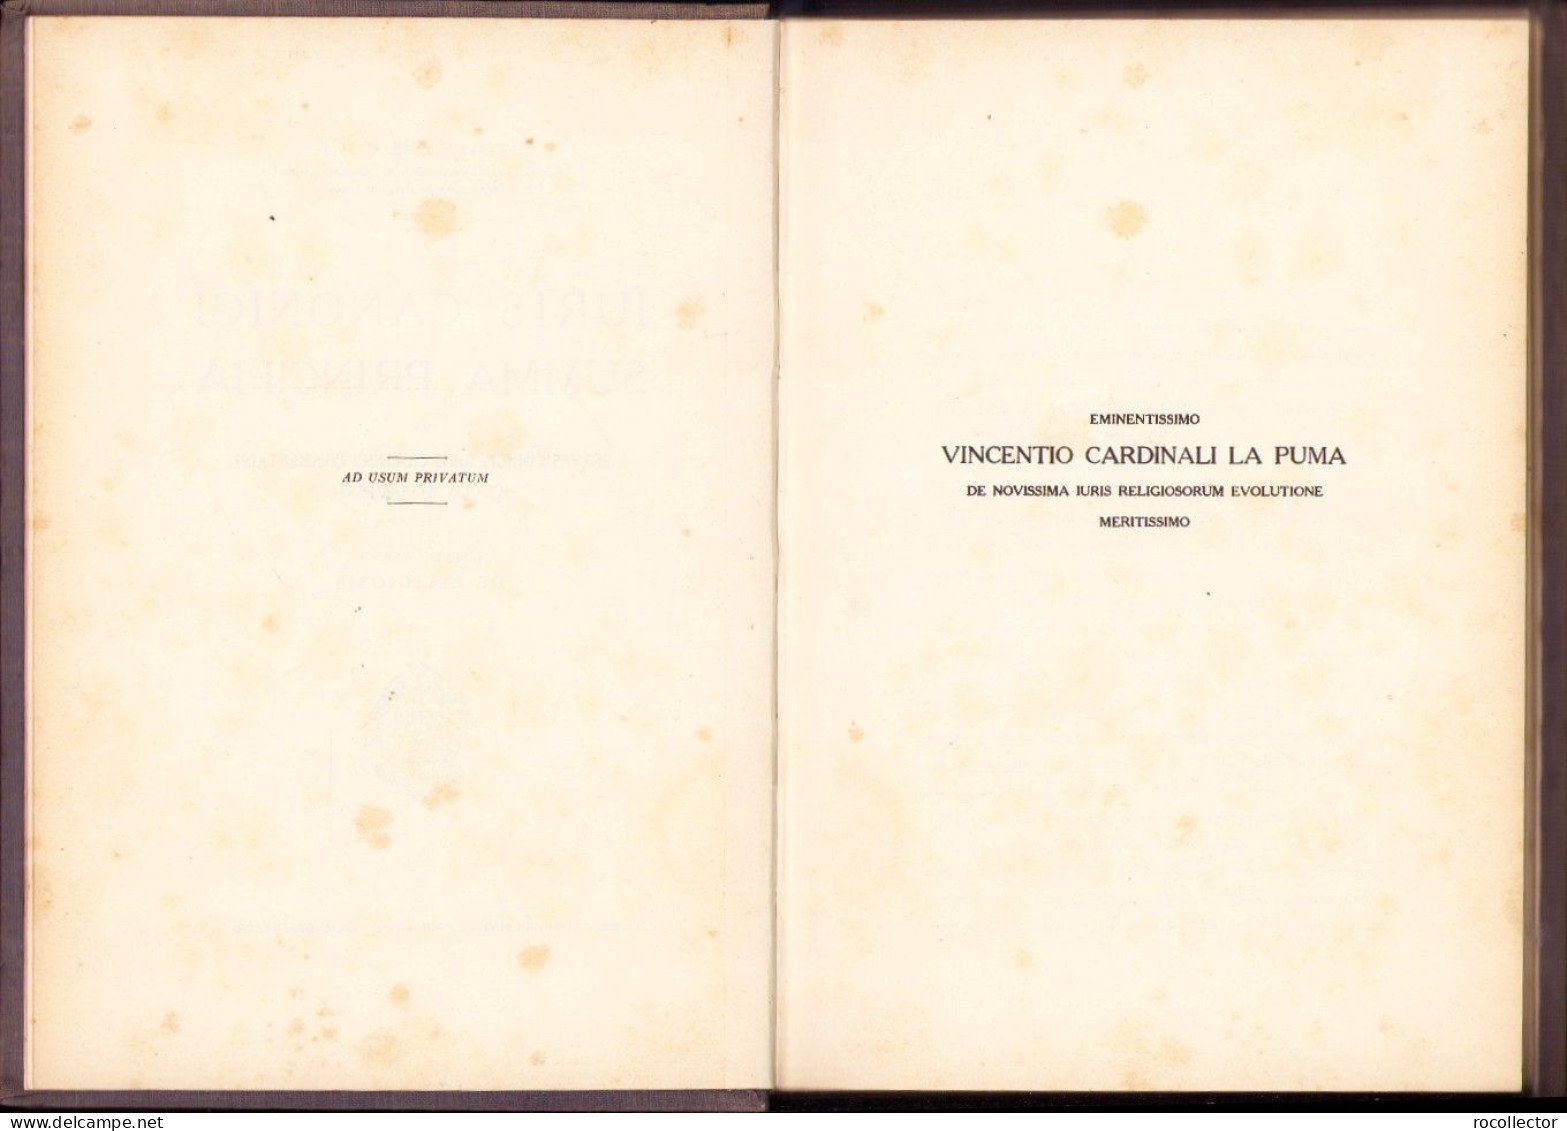 Iuris Canonici Summa Principia Seu Breves Codicis Iuris Canonici Commentarii Scholis Accomodati Libri II Pars II 1937 - Old Books